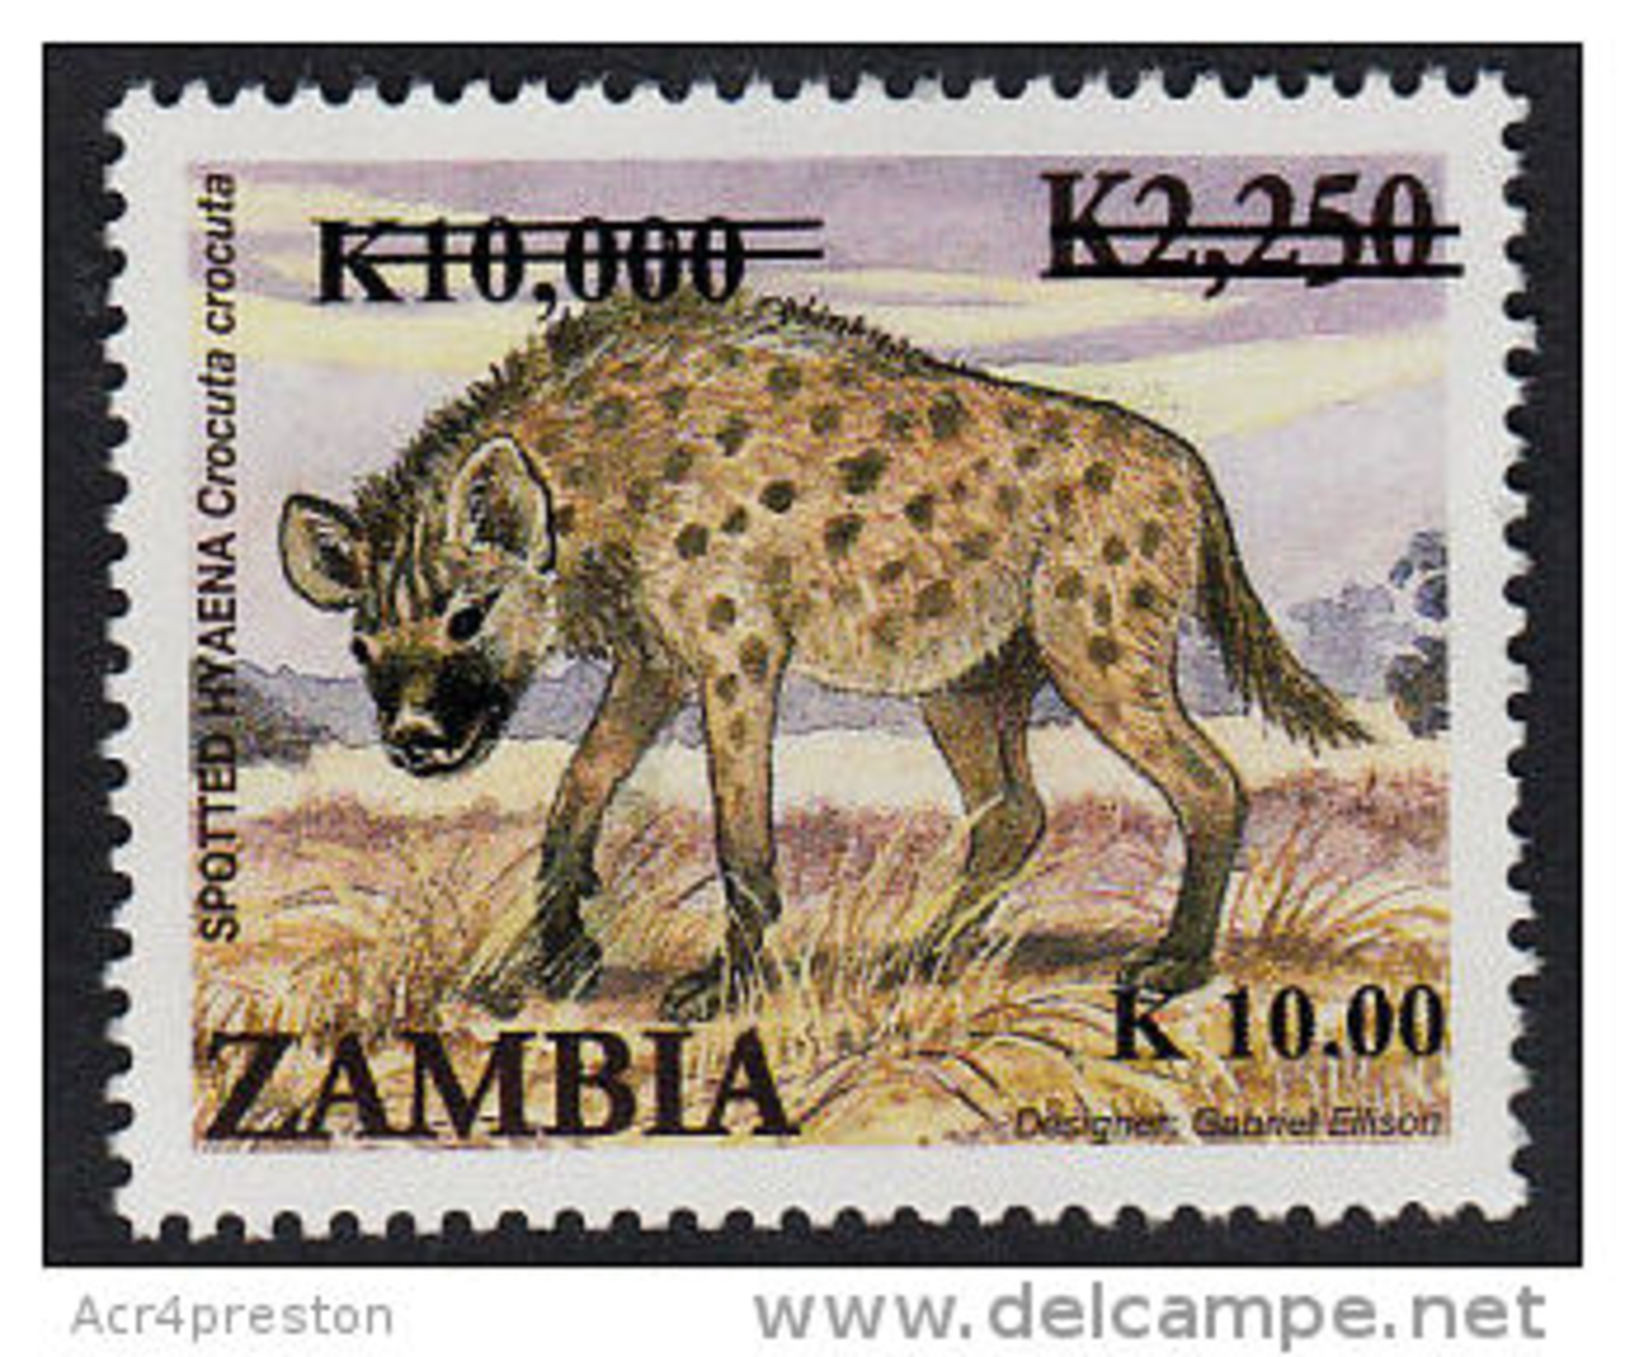 Zm1104 ZAMBIA 2013, SG1104 New Currency K10.00 On  K10,000 On K2,250 Animals  MNH - Zambie (1965-...)